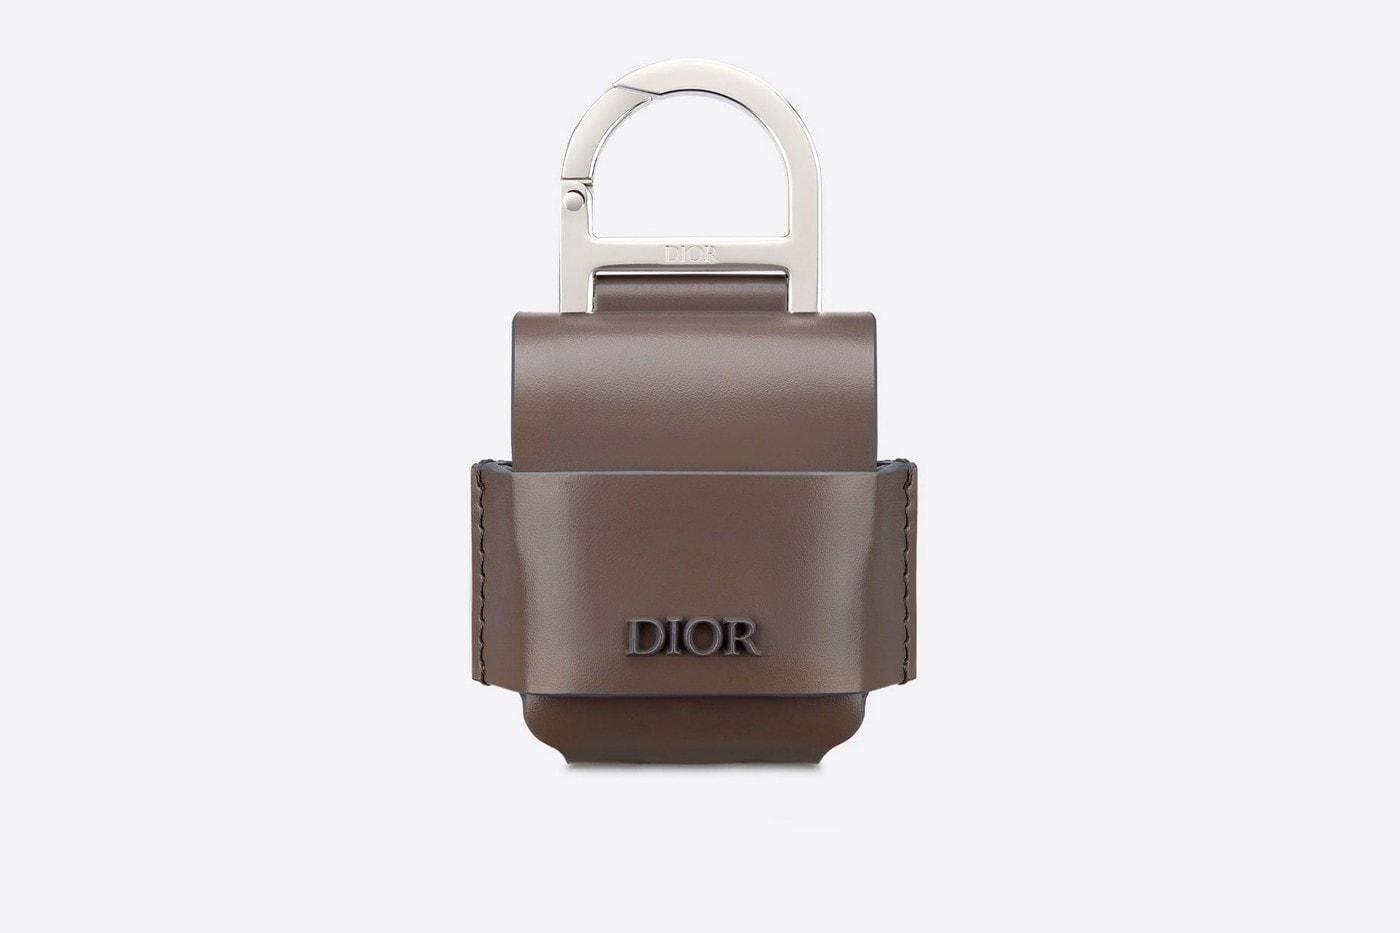 Dior 推出價值 $350 美元之頂上 AirPods 皮套